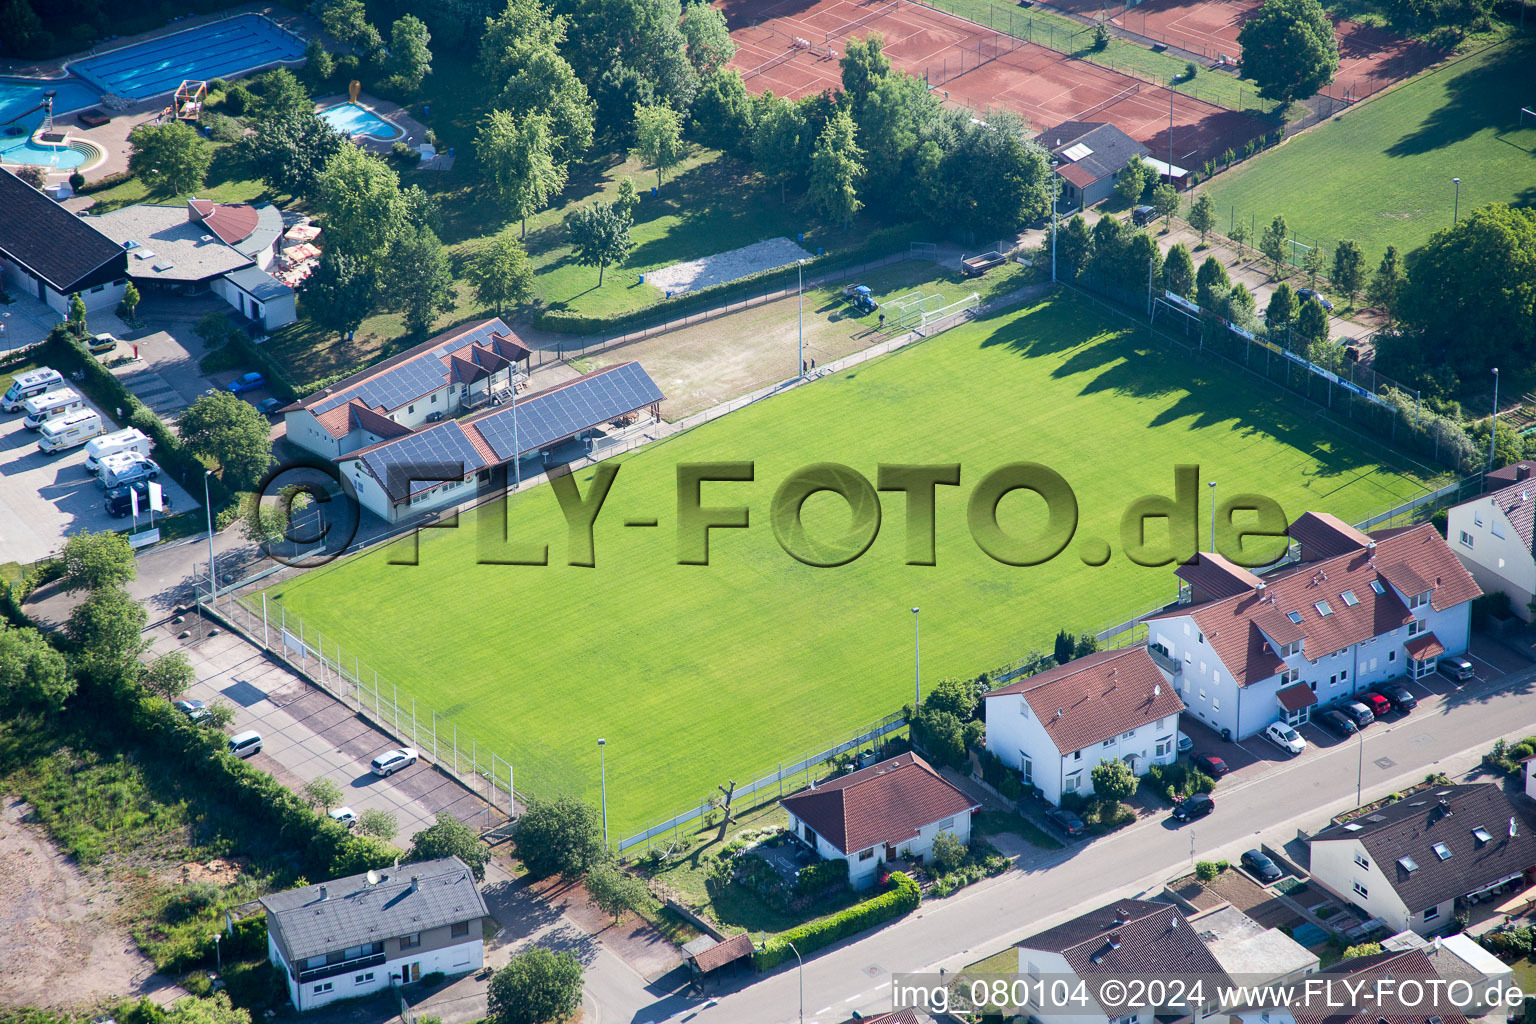 Sports fields in the district Ingenheim in Billigheim-Ingenheim in the state Rhineland-Palatinate, Germany